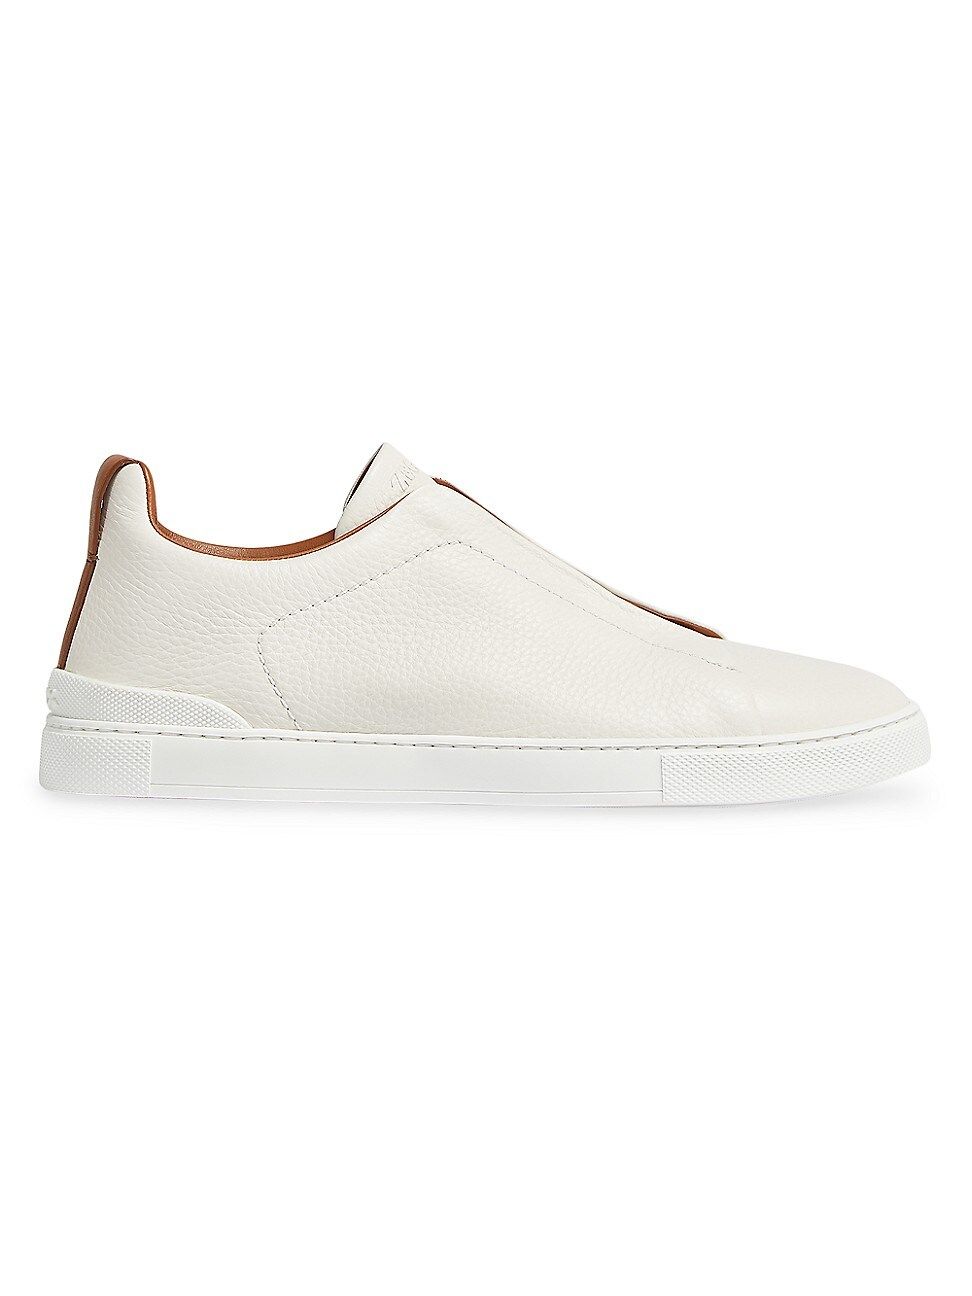 Men's Triple Stitch Leather Low-Top Sneakers - White Multi - Size 11.5 - White Multi - Size 11.5 | Saks Fifth Avenue